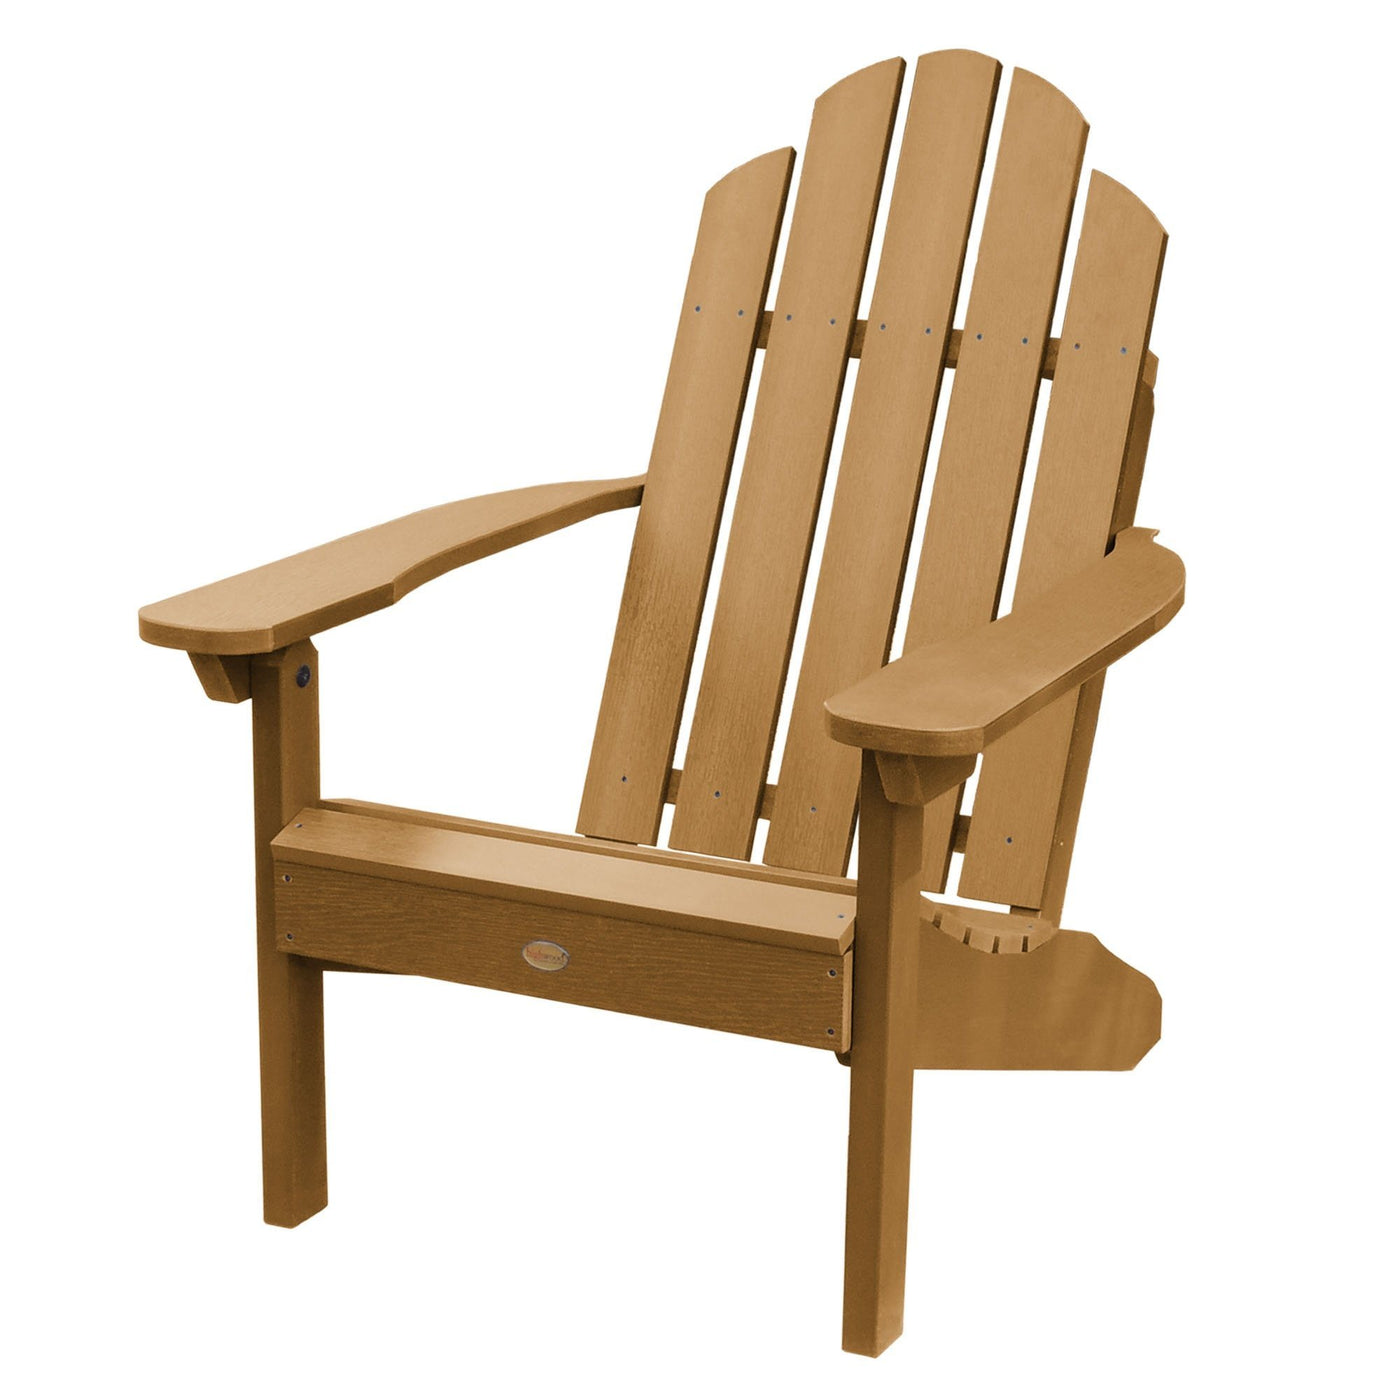 Refurbished Classic Westport Adirondack Chair Highwood USA Toffee 